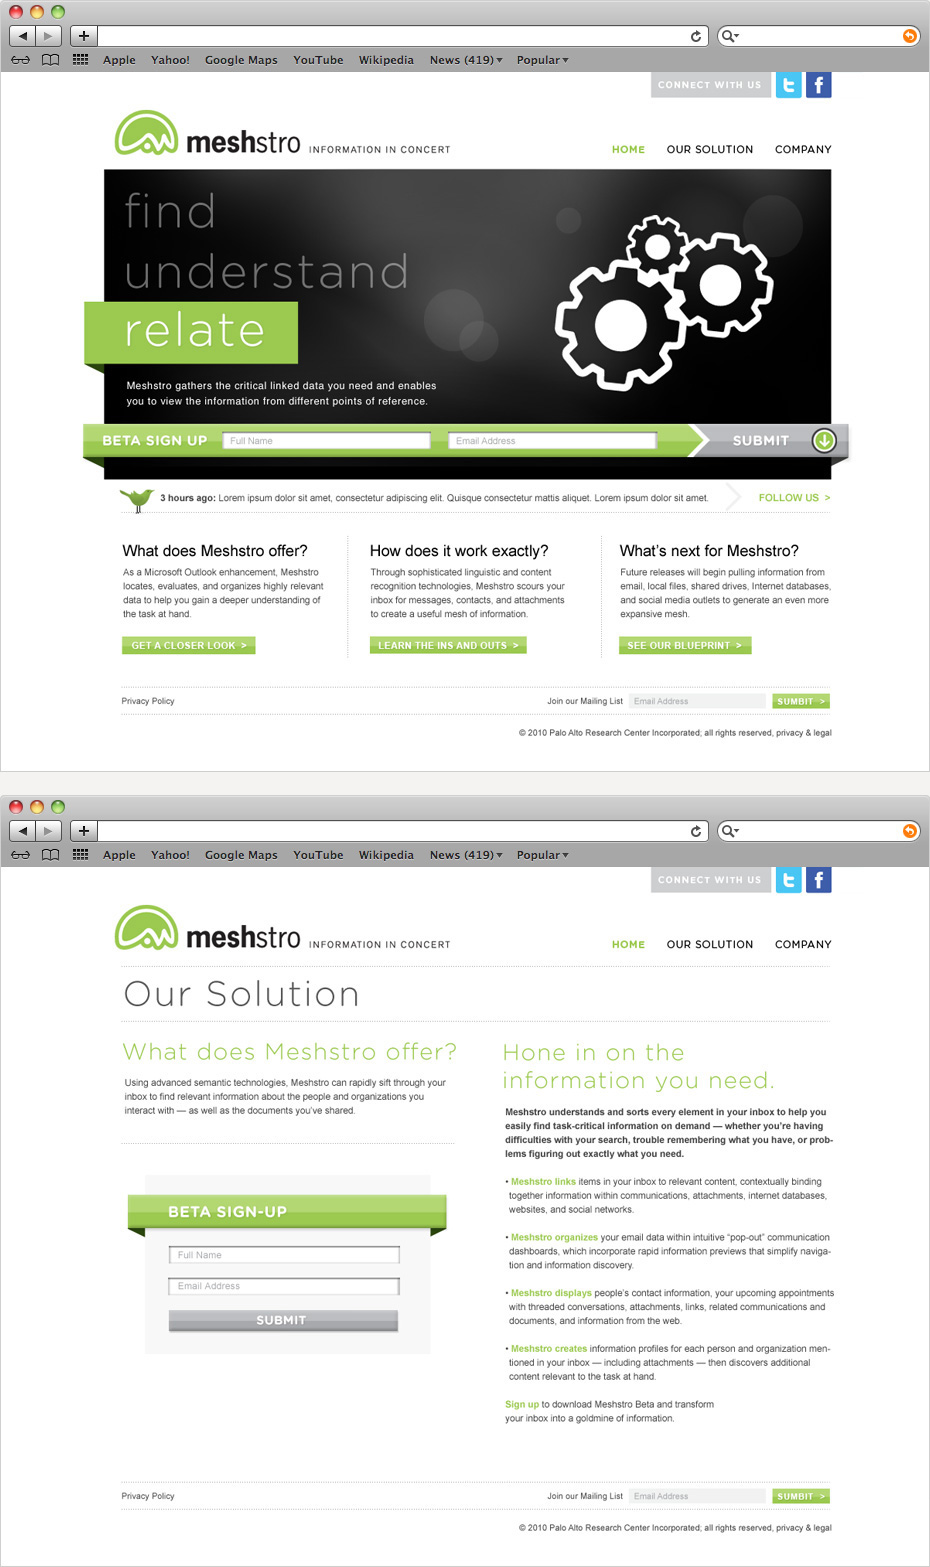 Meshstro Website Homepage & Solution Webpage